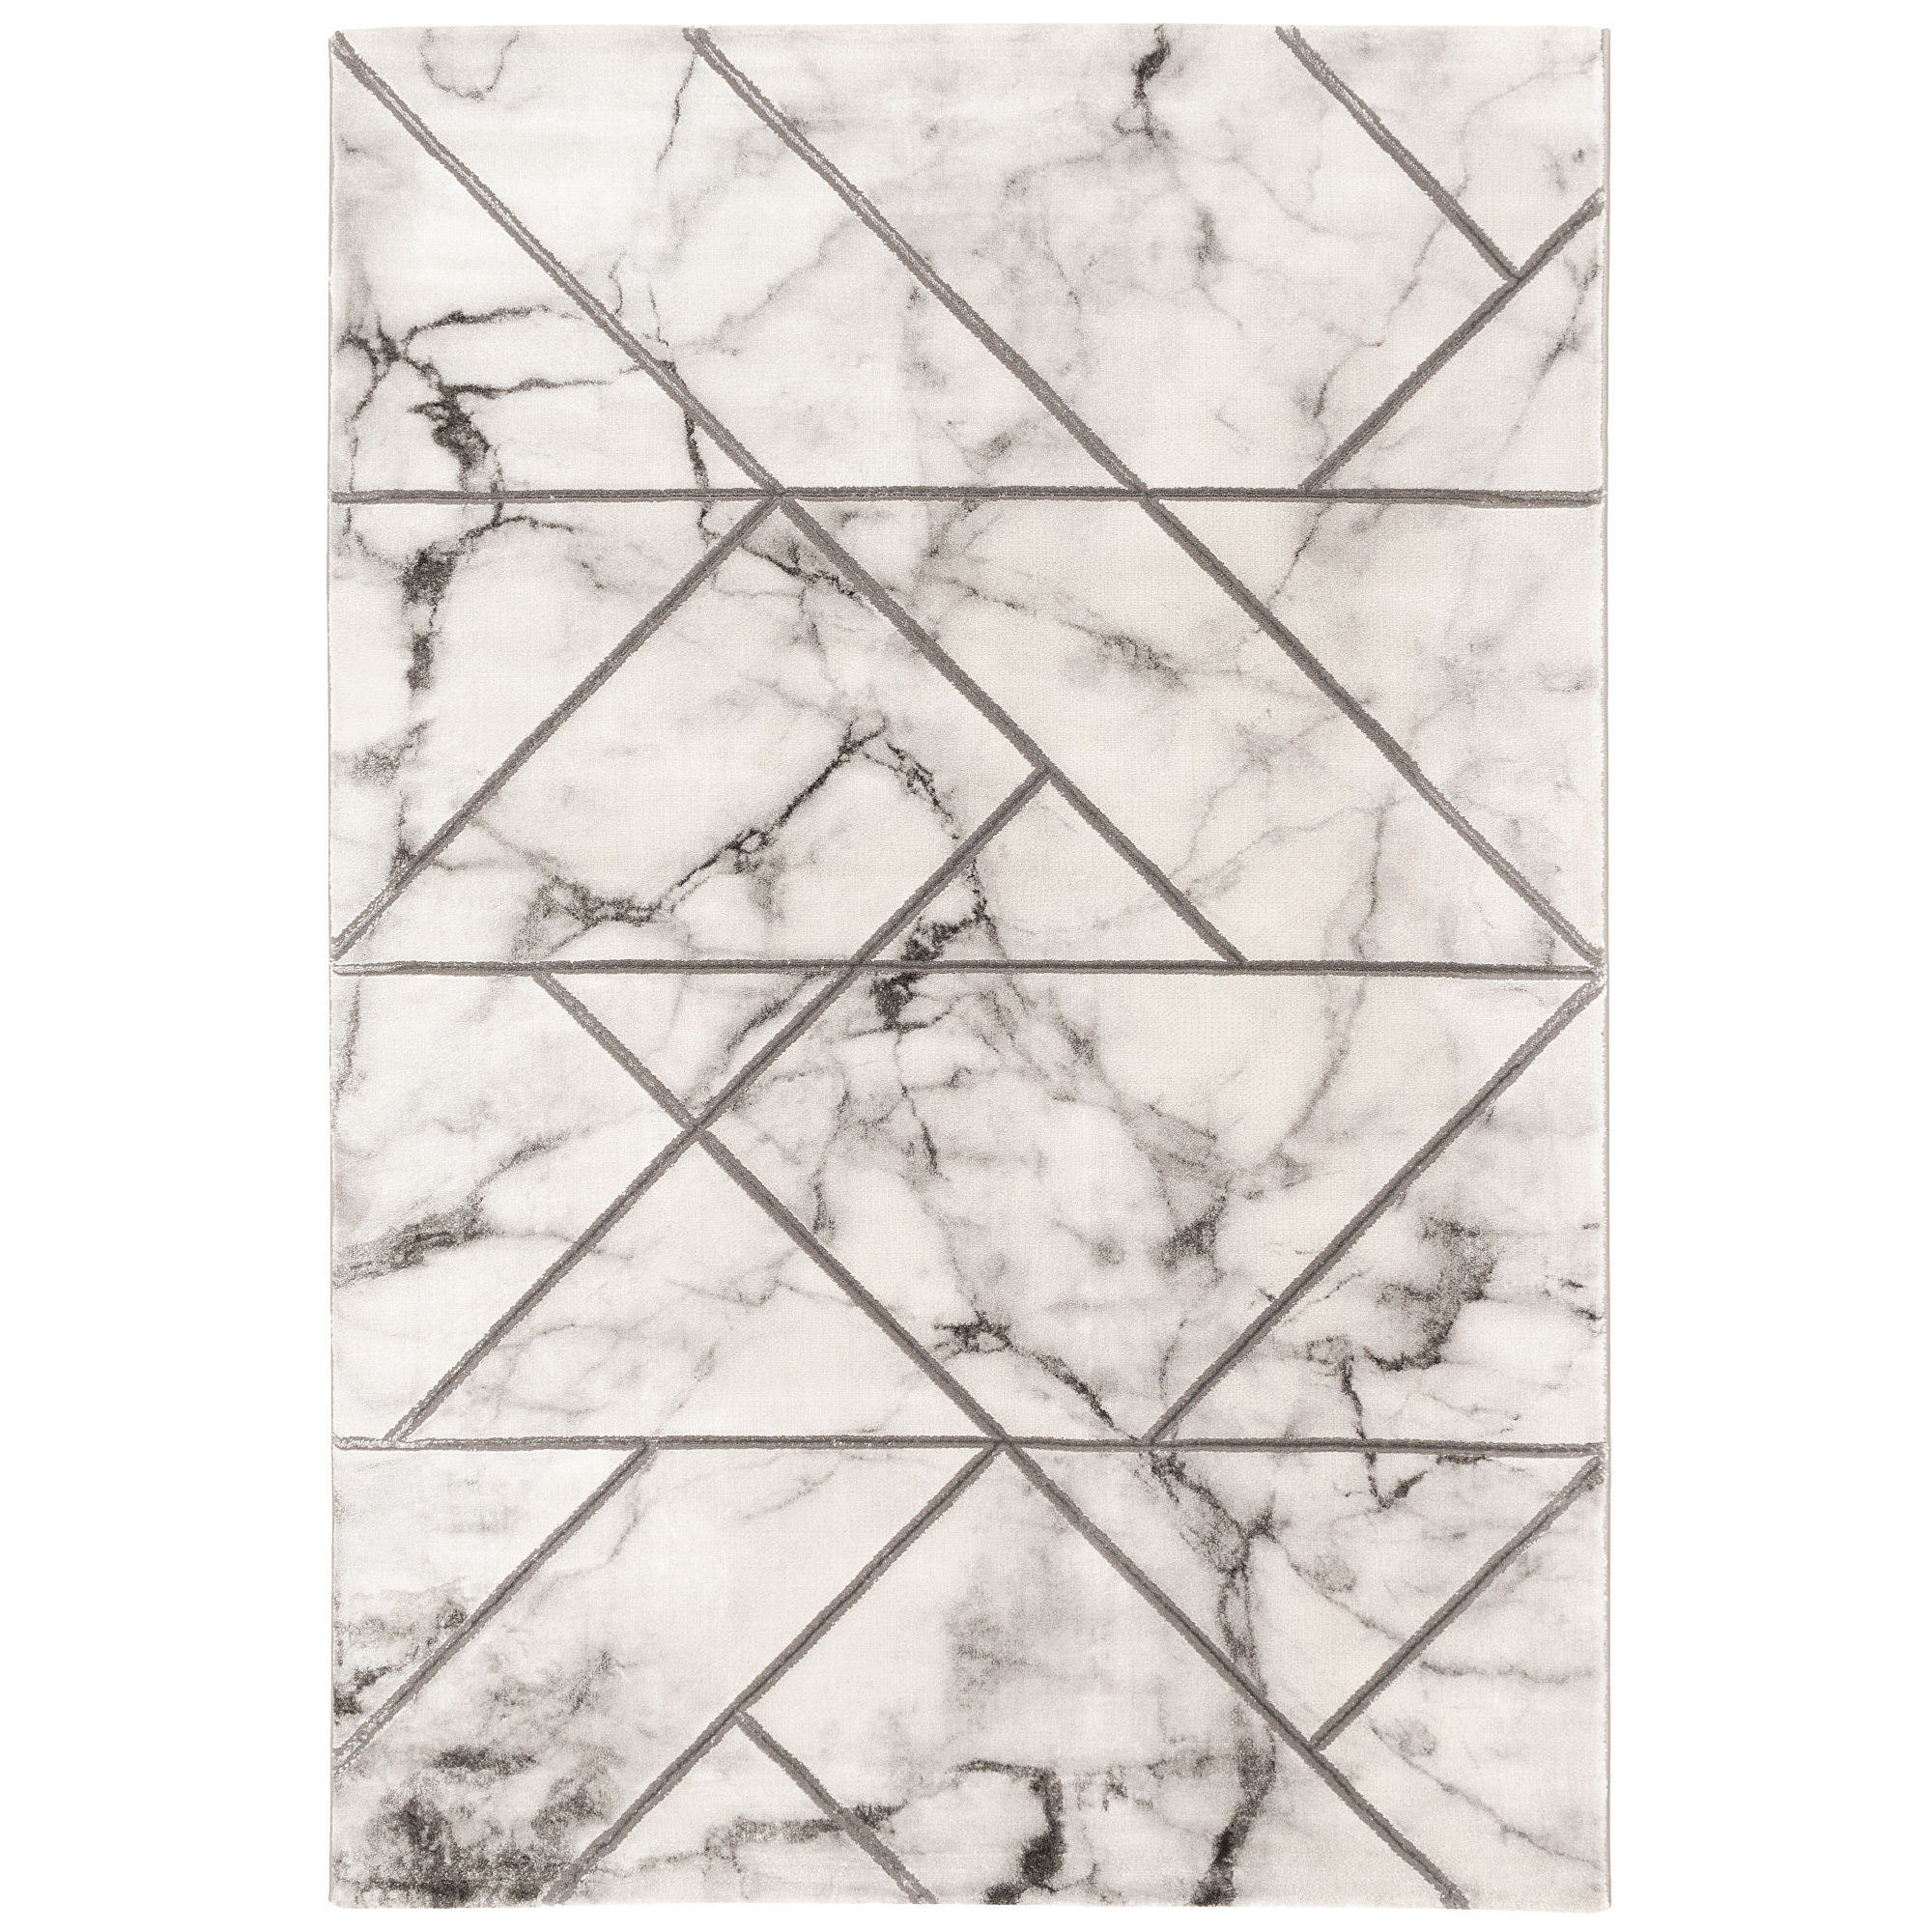 Teppich Carrara Marmor Optik Trend kaufen | home24